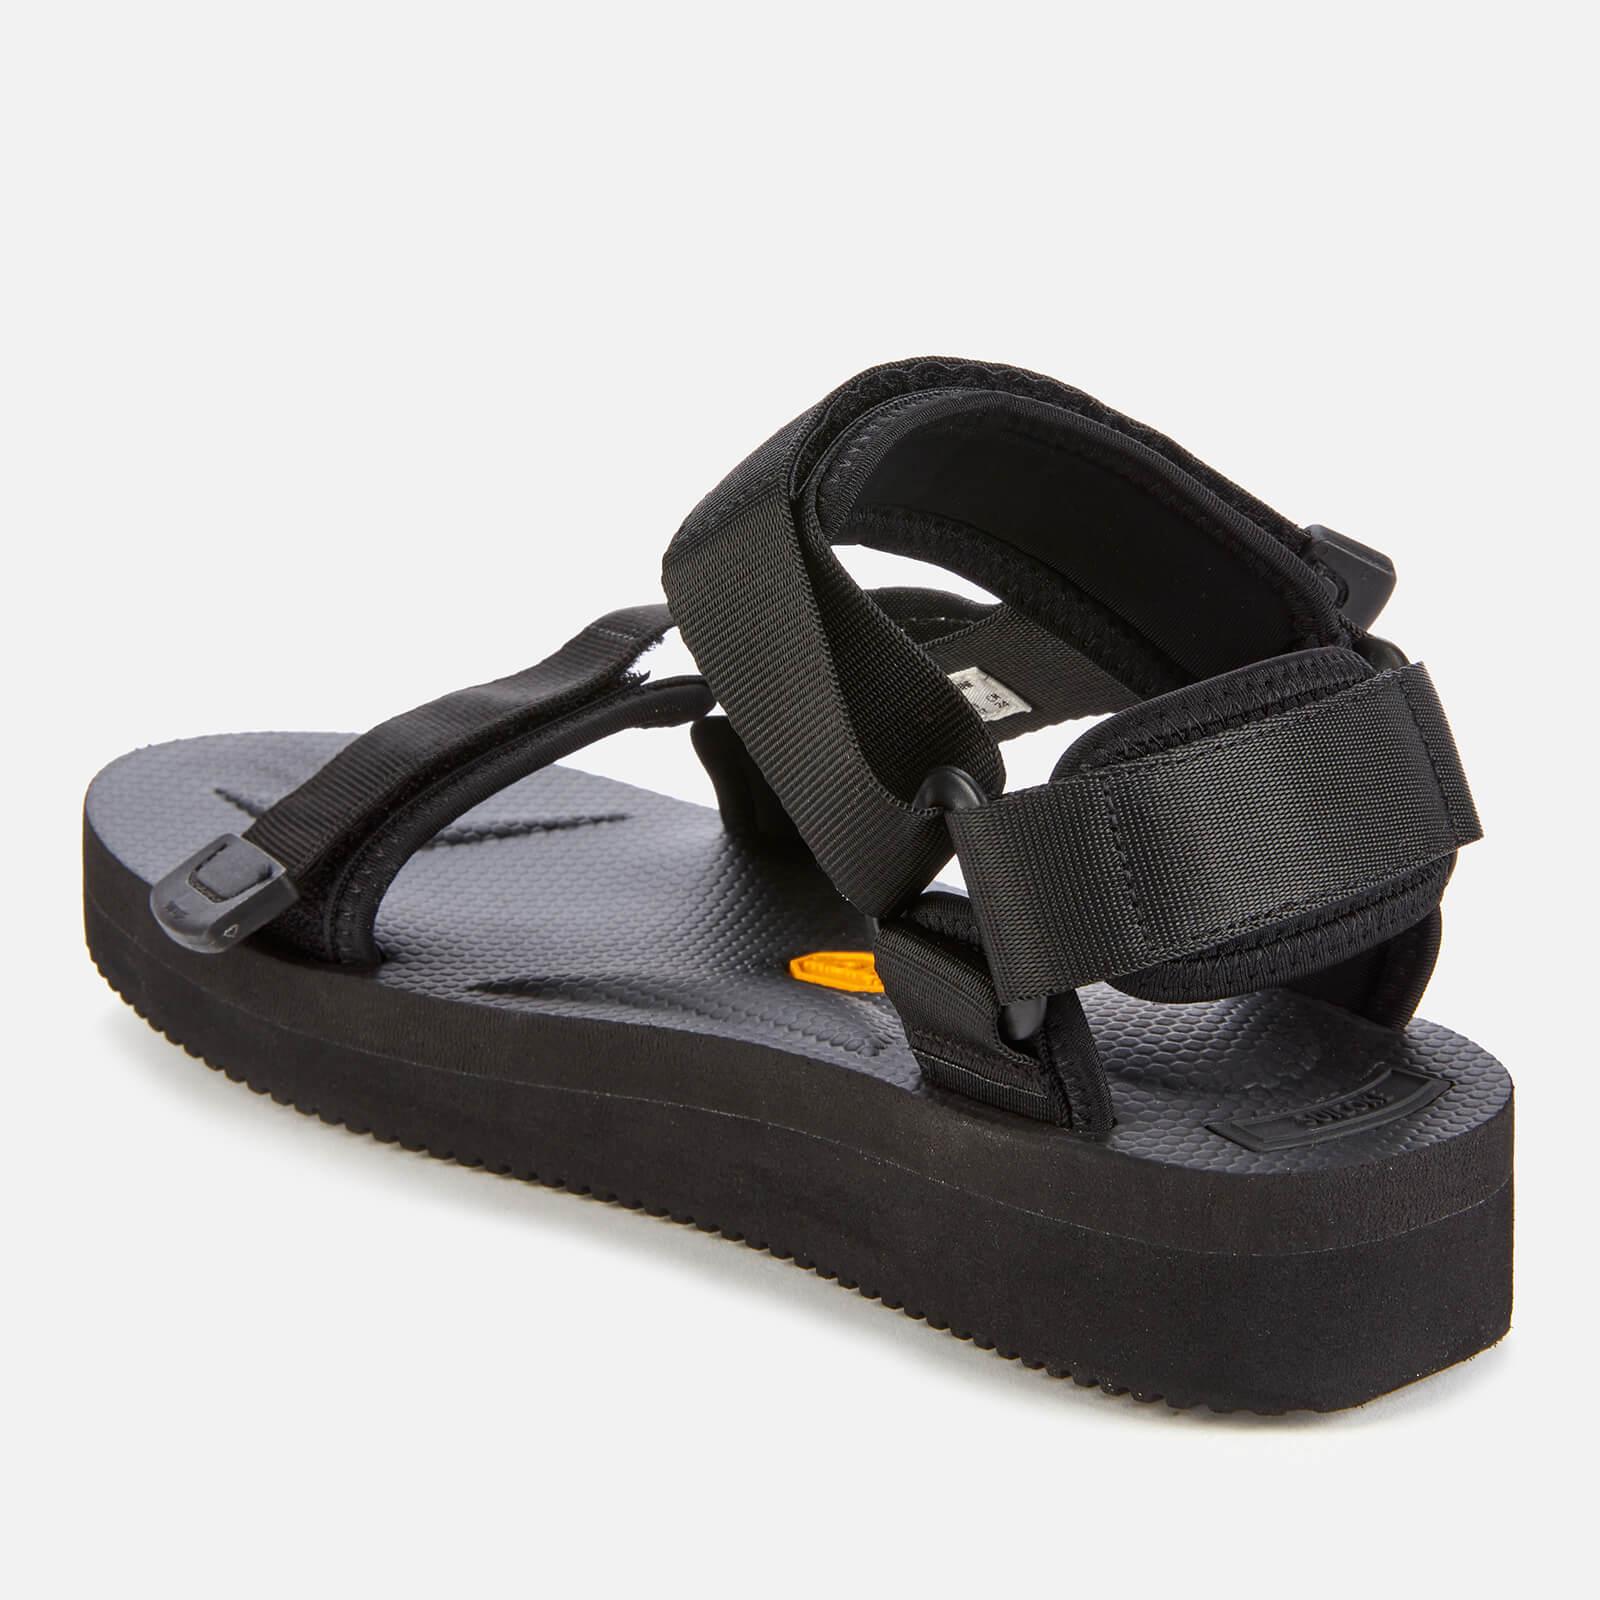 Suicoke Synthetic Depa-v2 Nylon Sandals in Black - Lyst